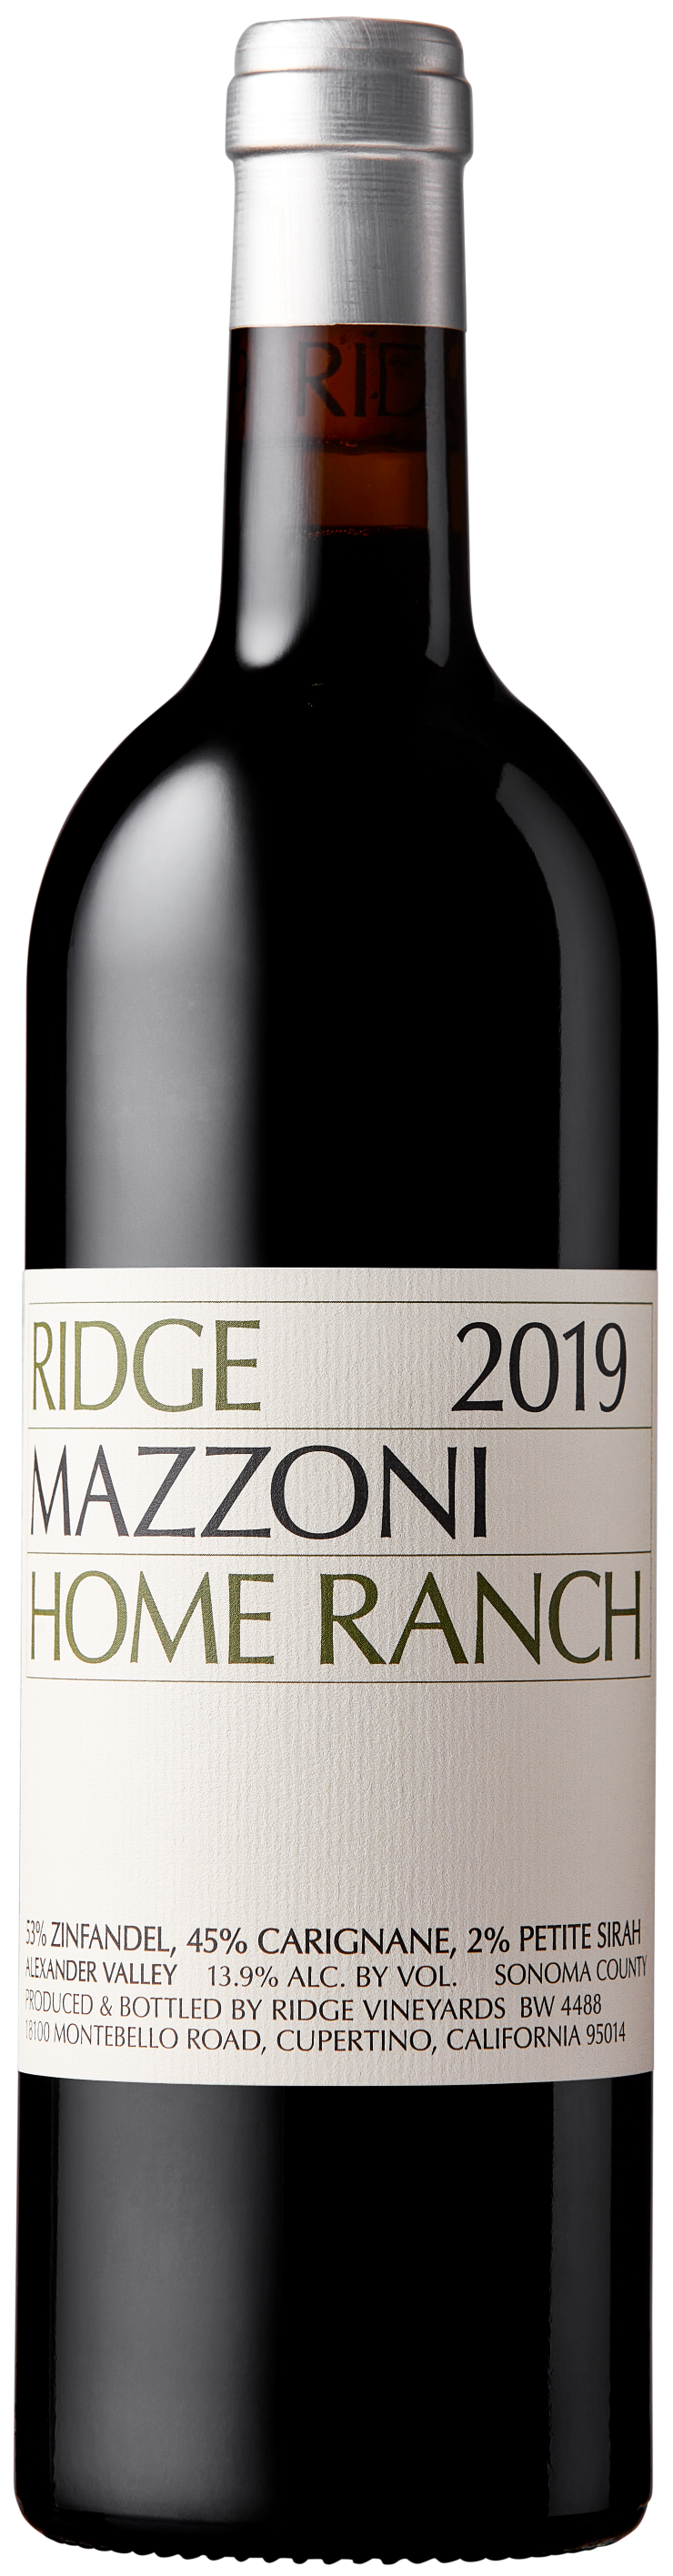 2019 Mazzoni Home Ranch